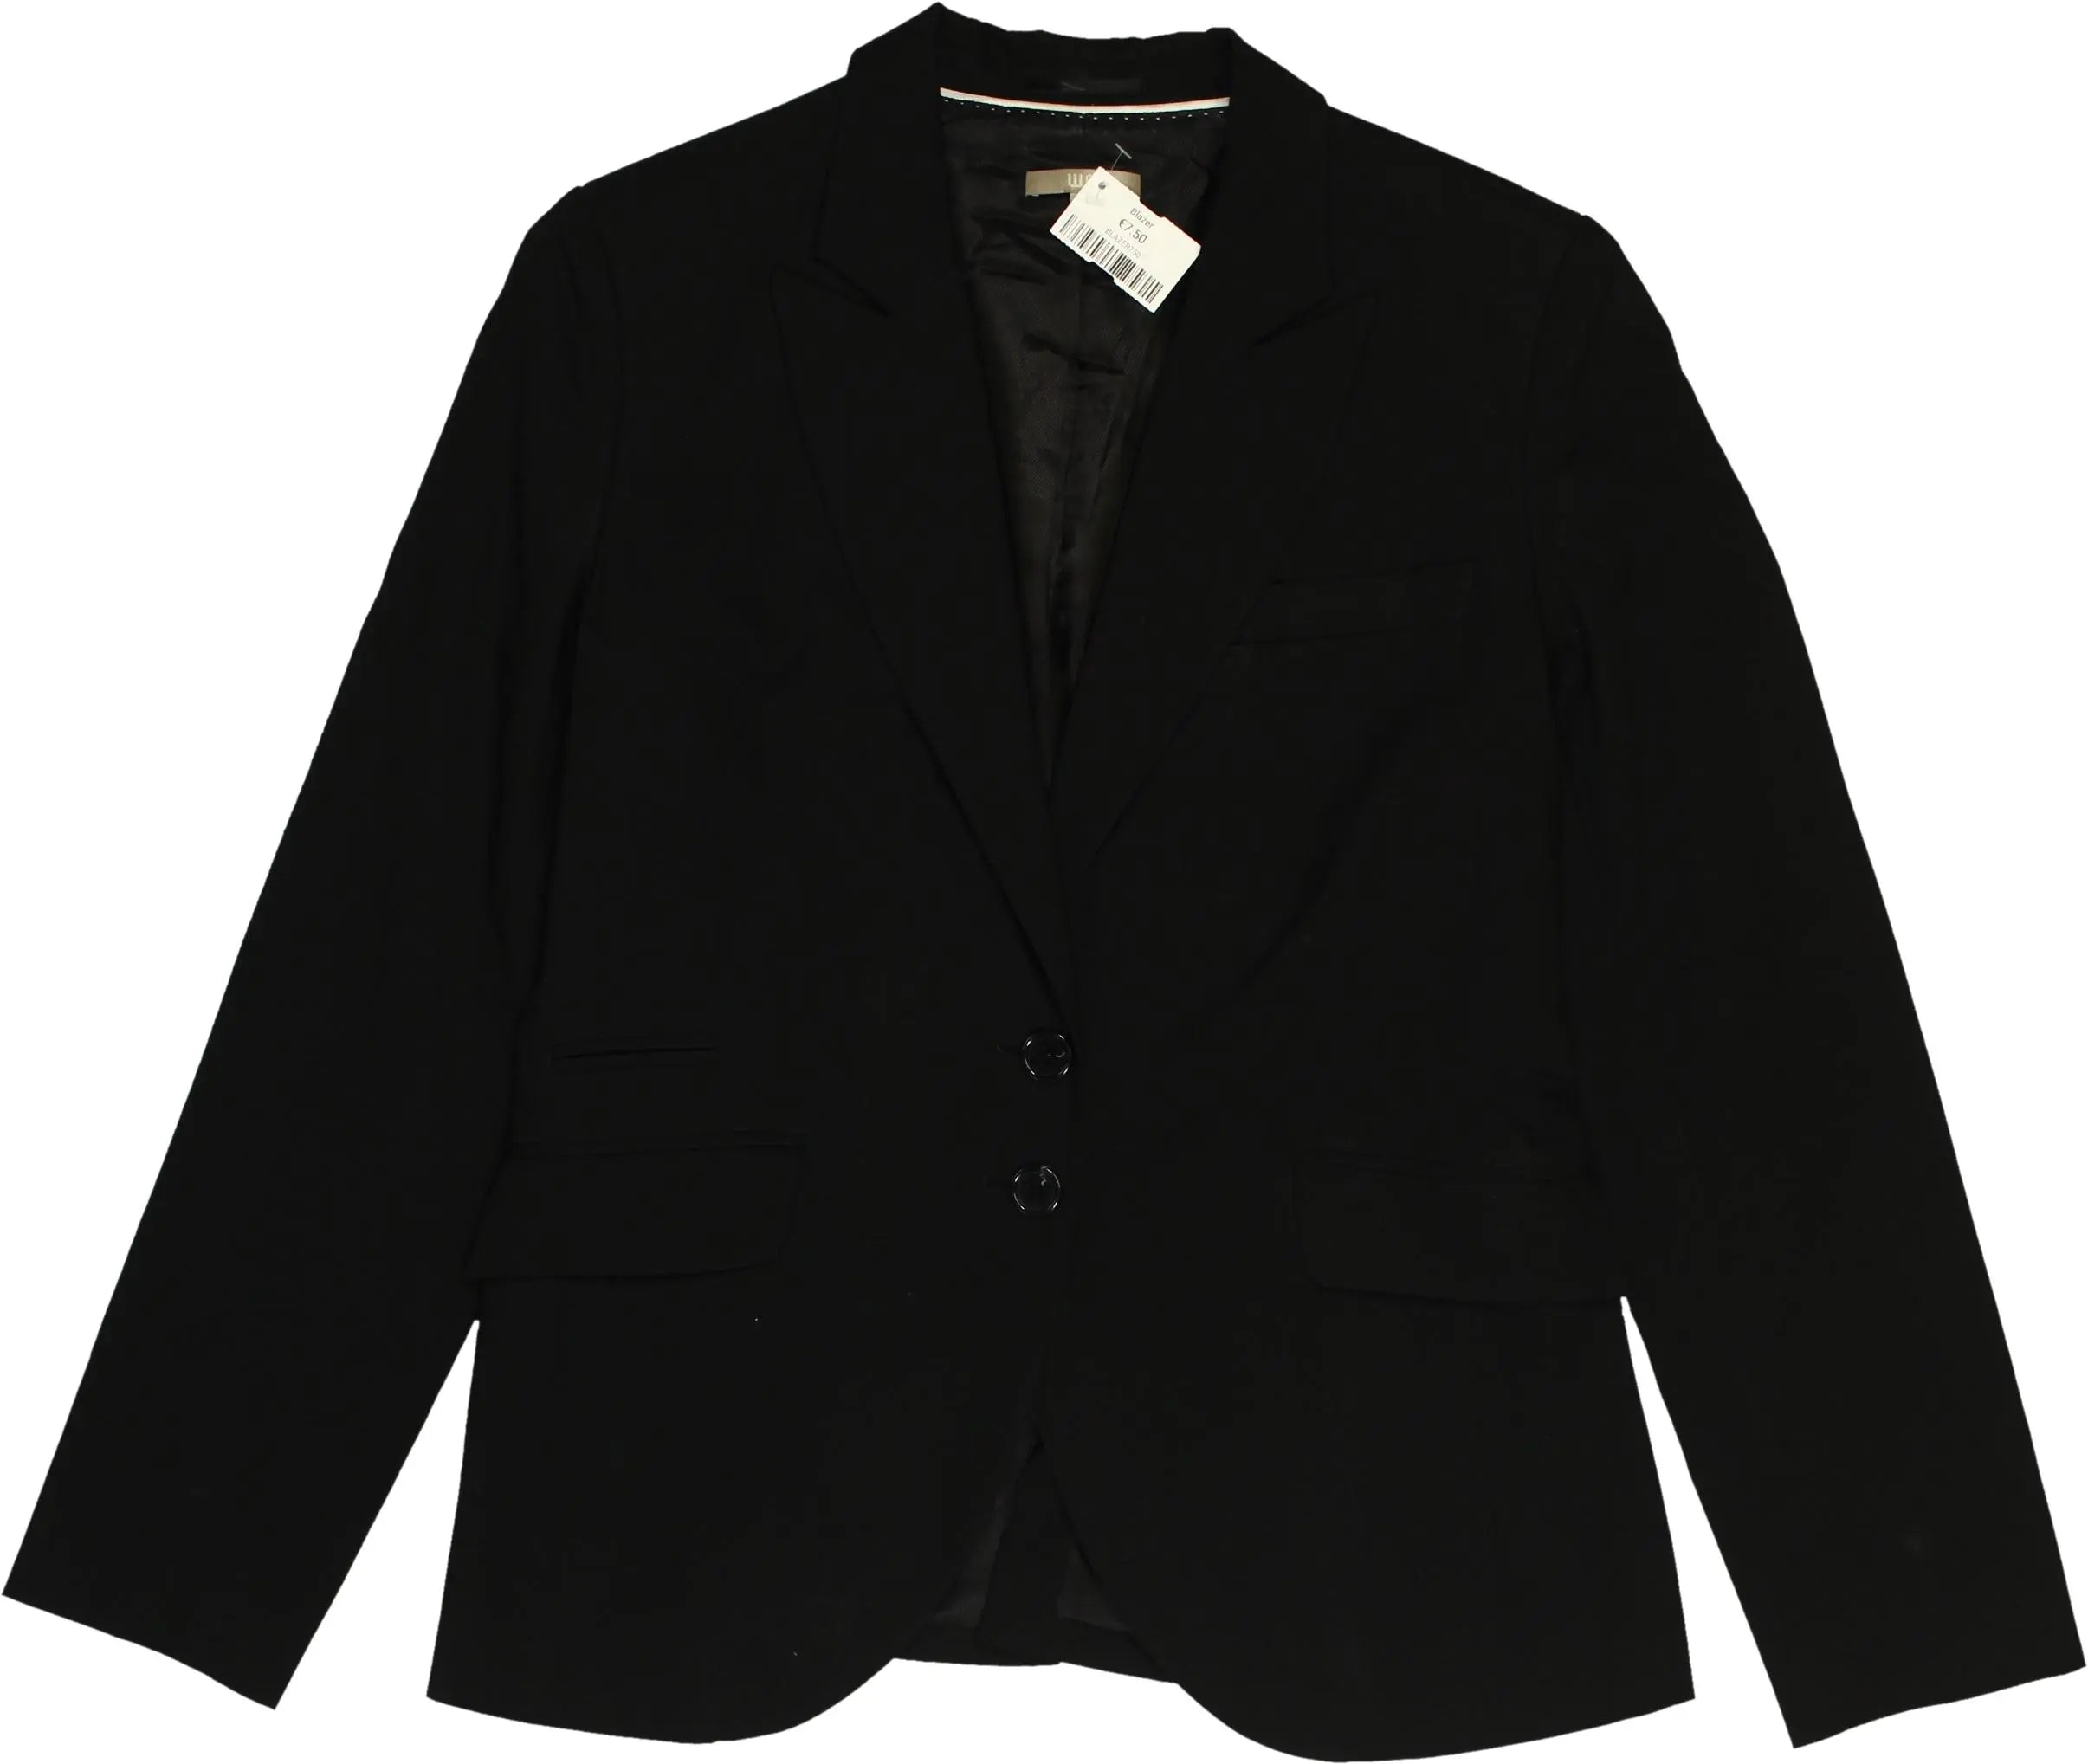 WE - Black blazer- ThriftTale.com - Vintage and second handclothing